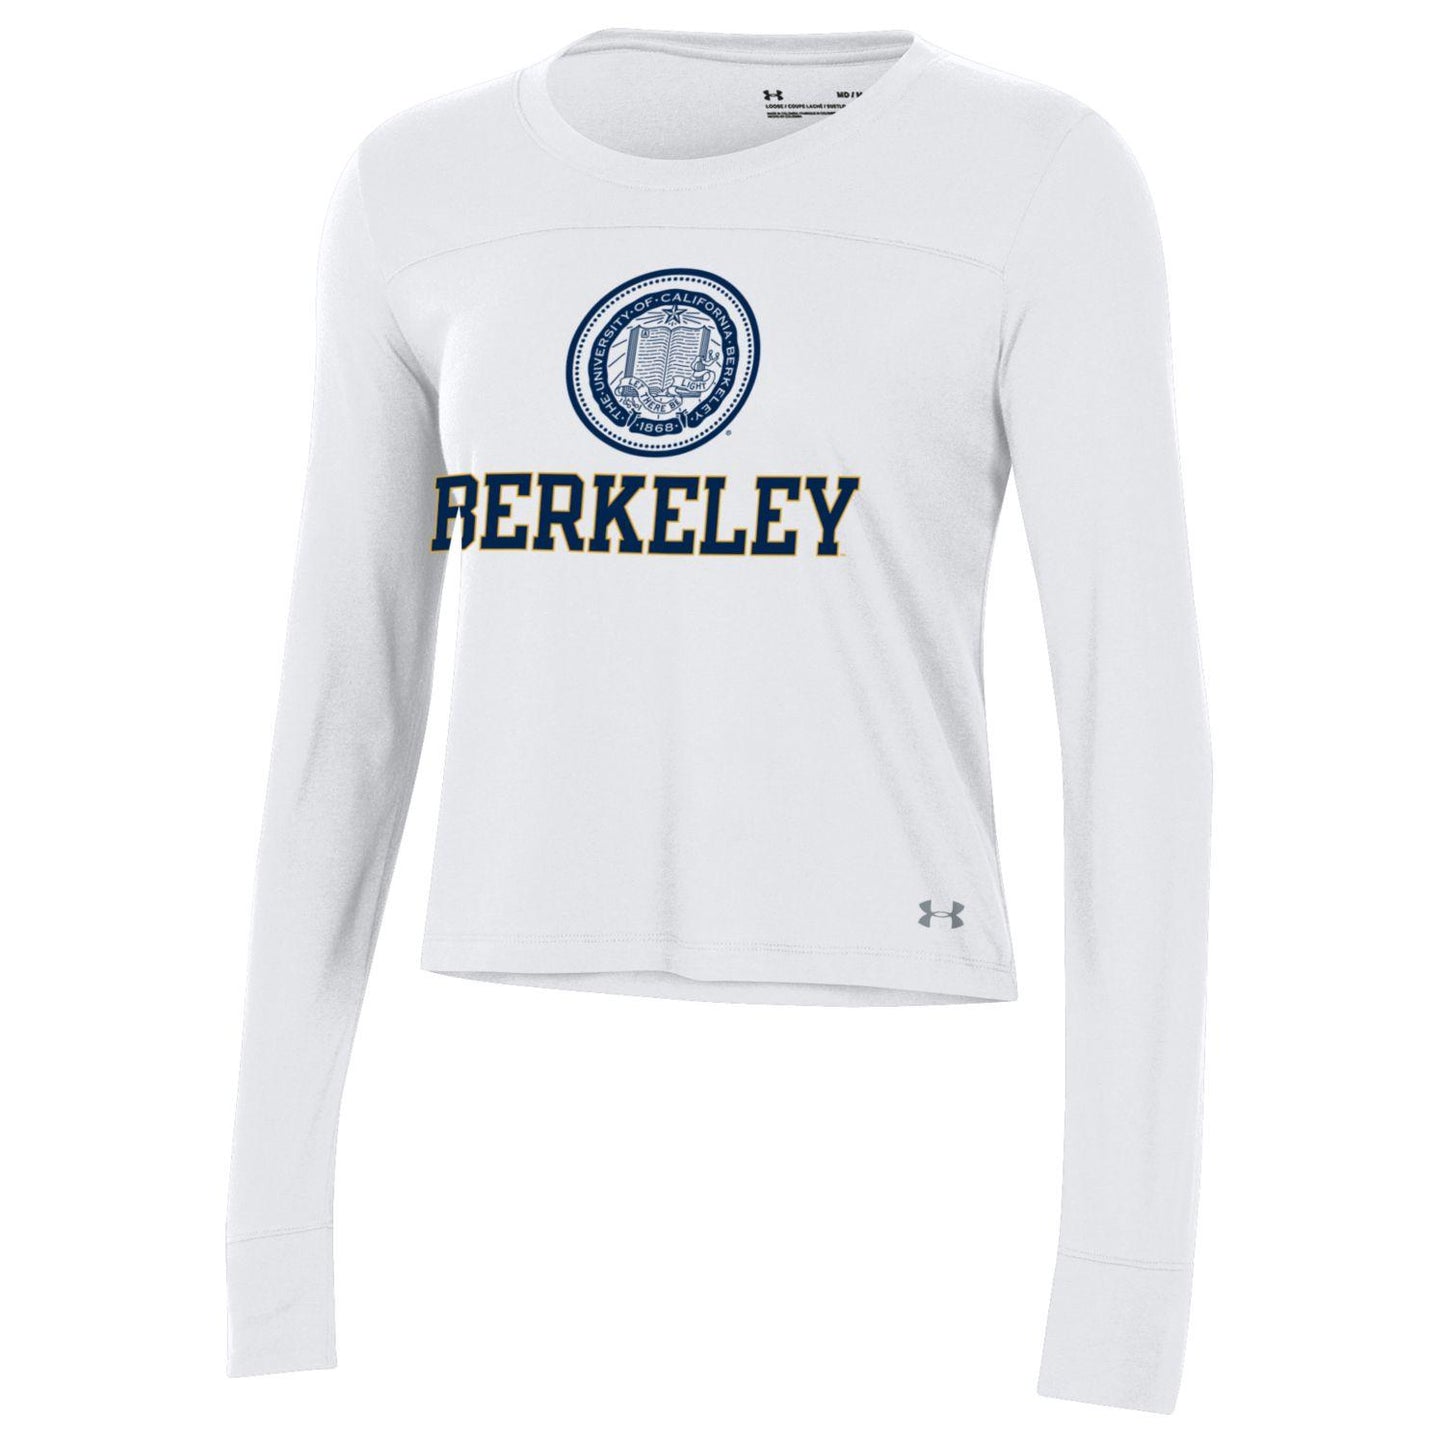 U.C. Berkeley arch & seal Under Armour women's performance cotton long sleeve T-Shirt-White-Shop College Wear